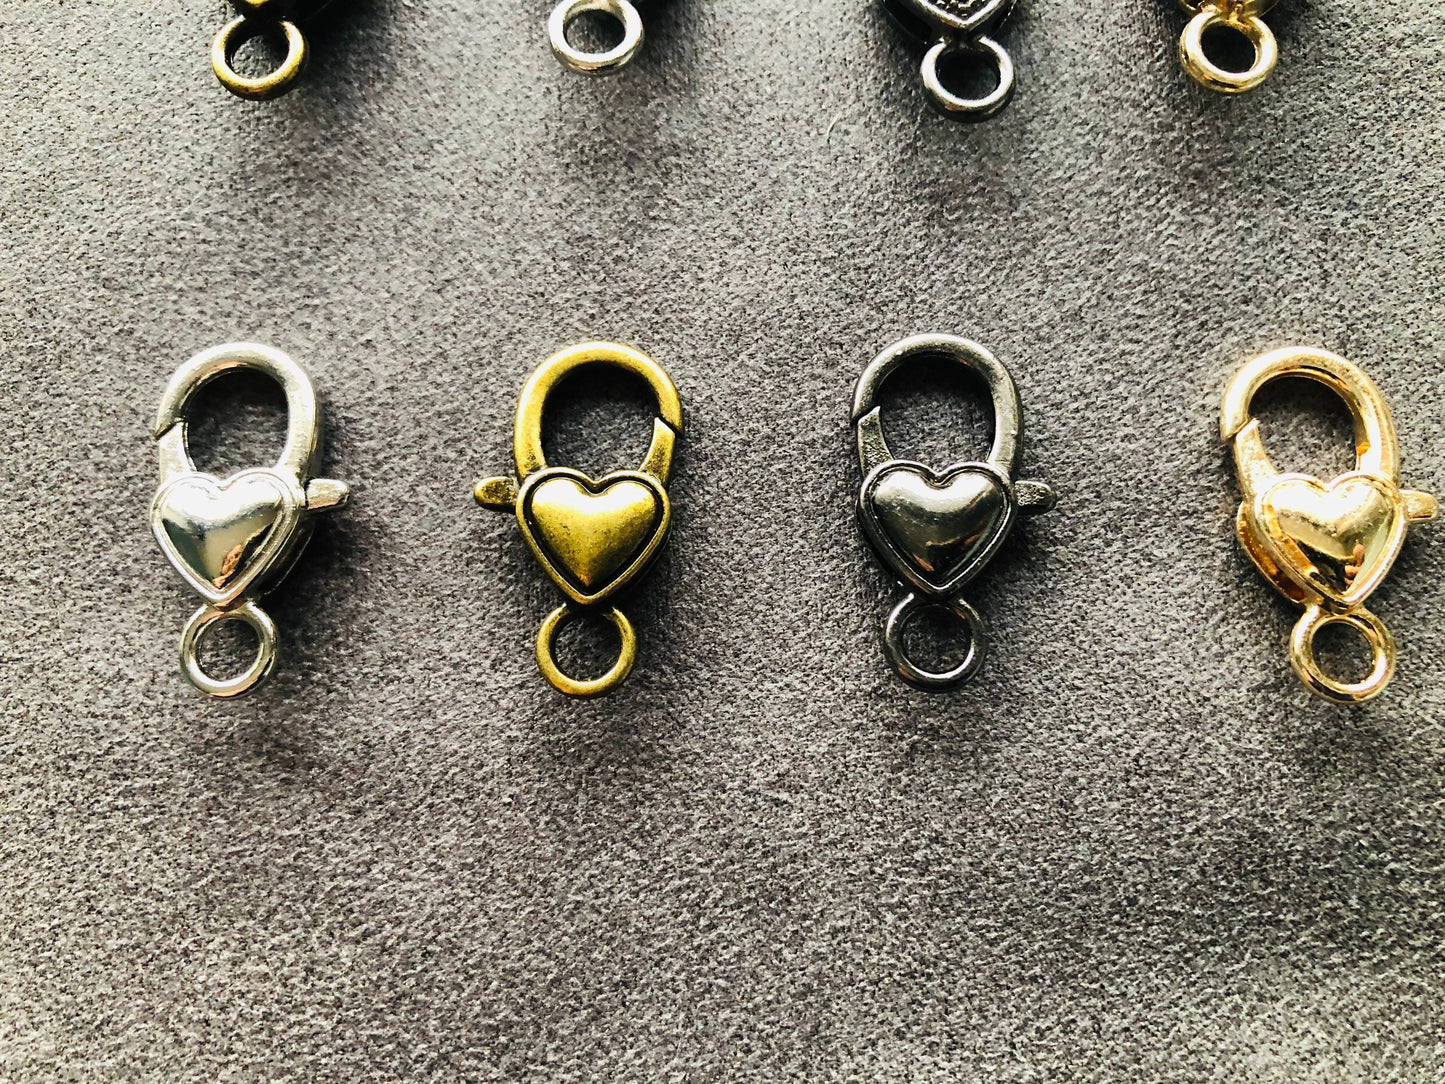 Vintage love heart metal hooks for wristlets, tassels, bag charms, key charms, crafts, bag hardware, bag making,retro style metal hooks